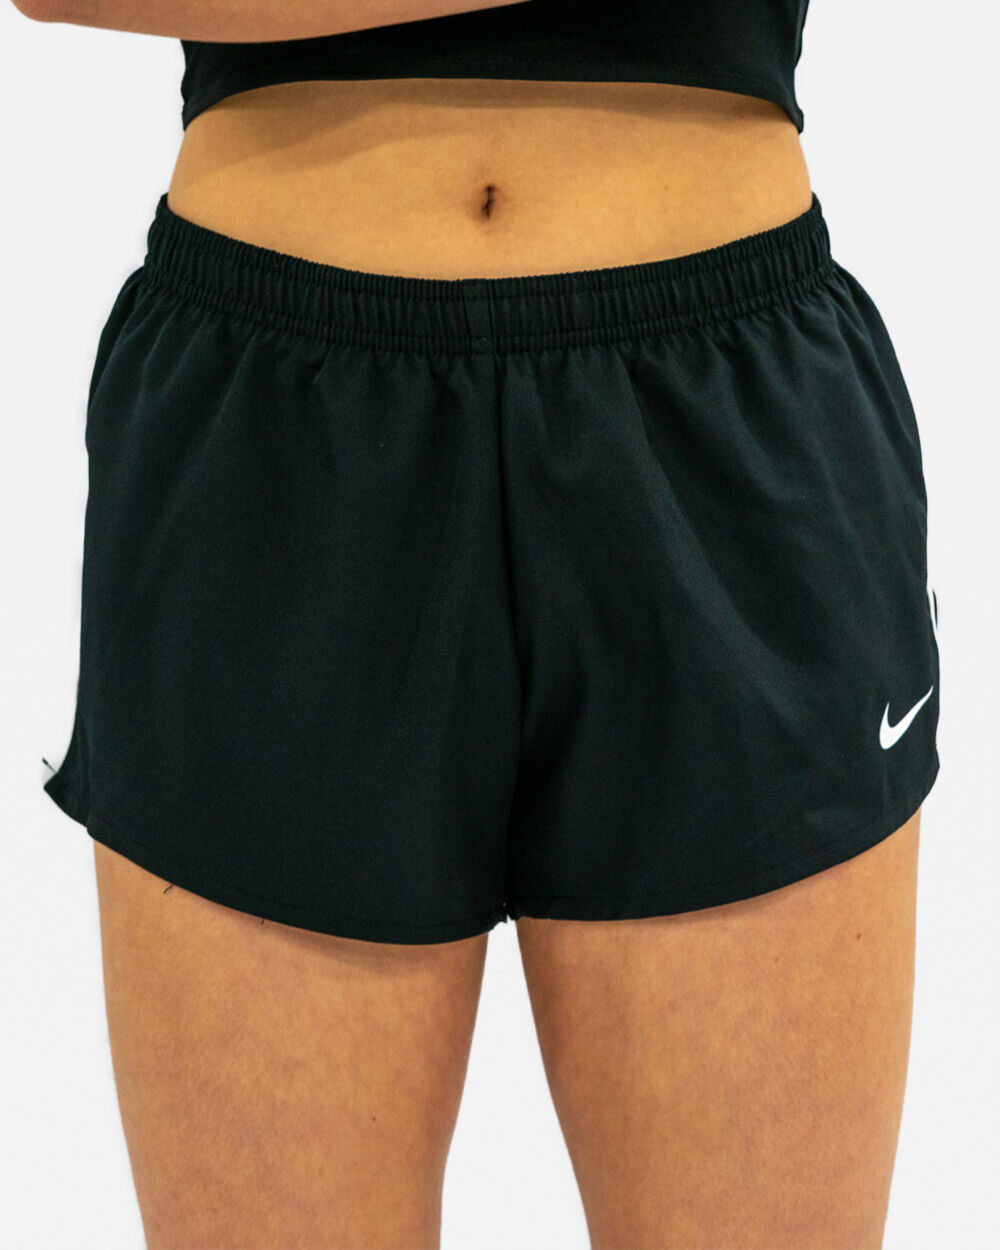 Pantalón corto para correr Nike Stock Negro para Mujeres - NT0304-010